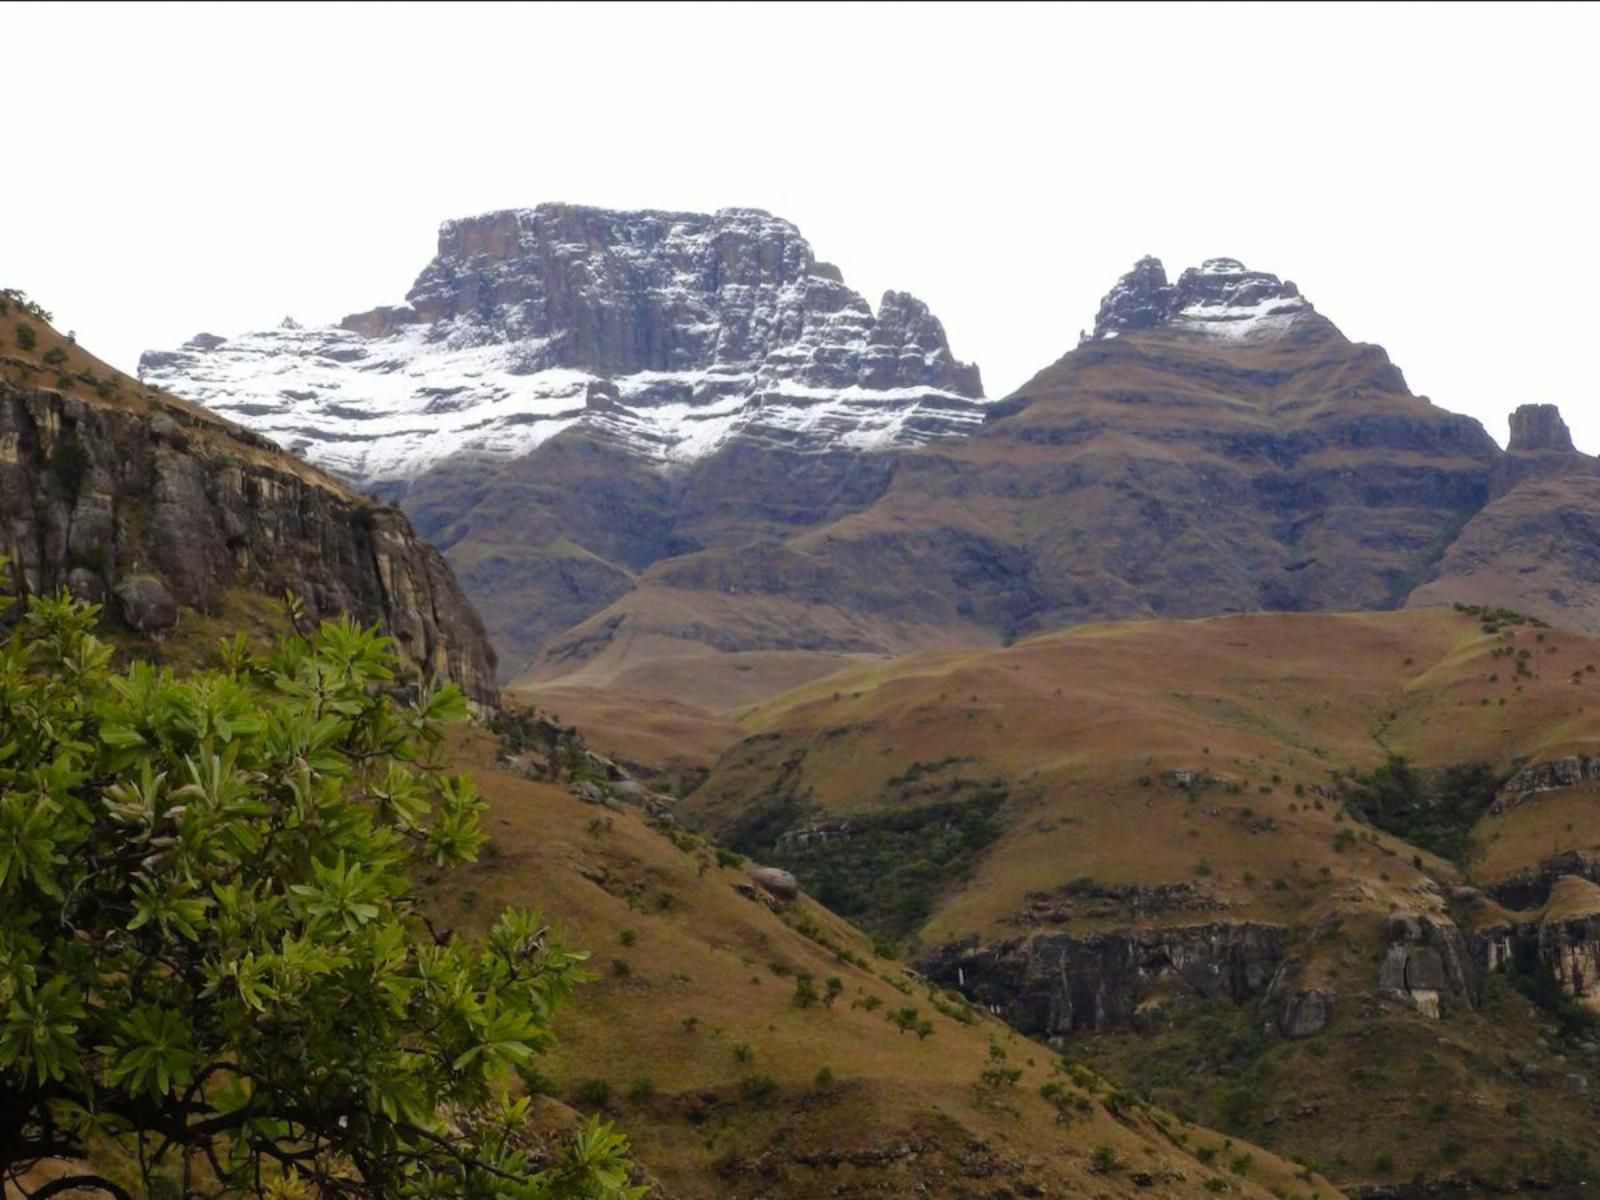 Ikhayalamafu Mountain Reserve Champagne Valley Kwazulu Natal South Africa Mountain, Nature, Highland